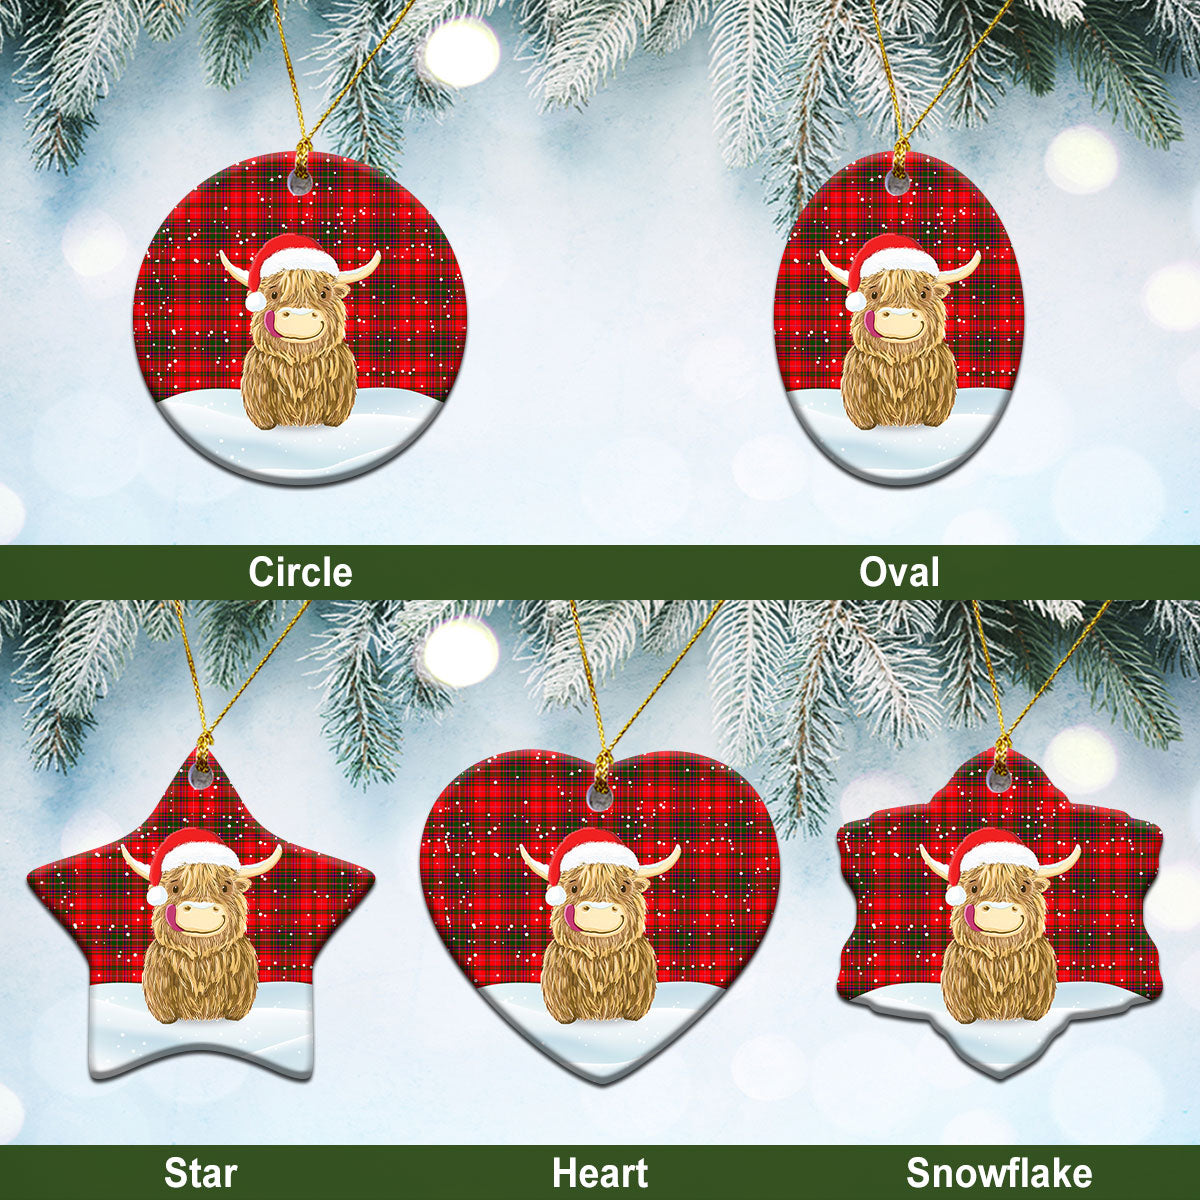 MacDougall Modern Tartan Christmas Ceramic Ornament - Highland Cows Style